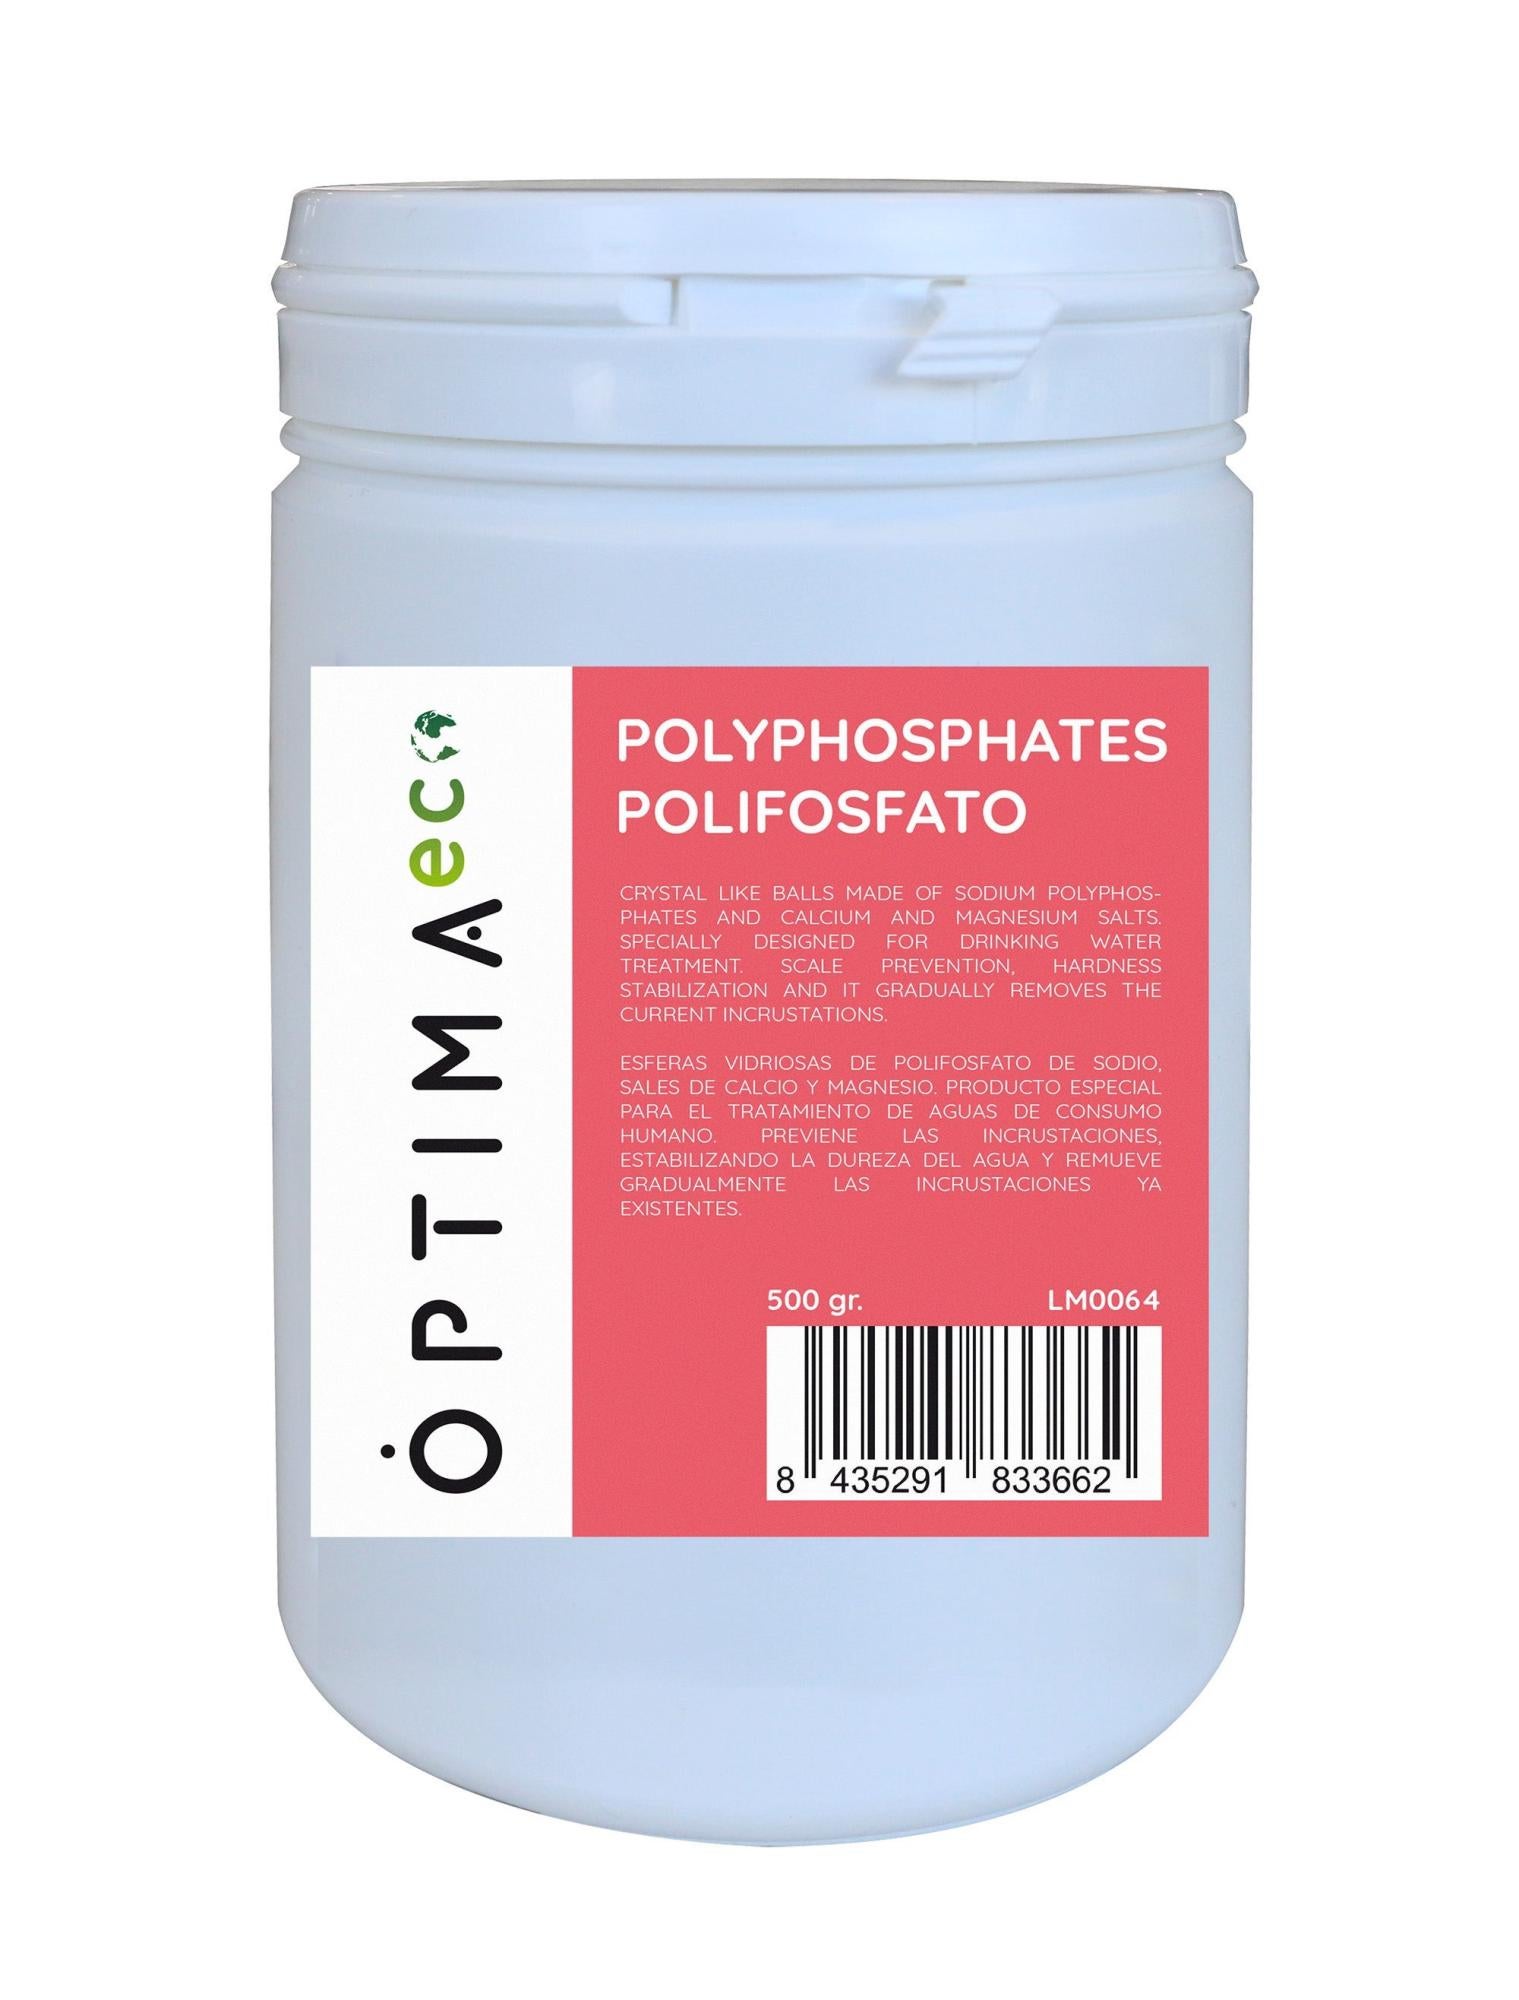 Bote de polifosfatos de 500 g